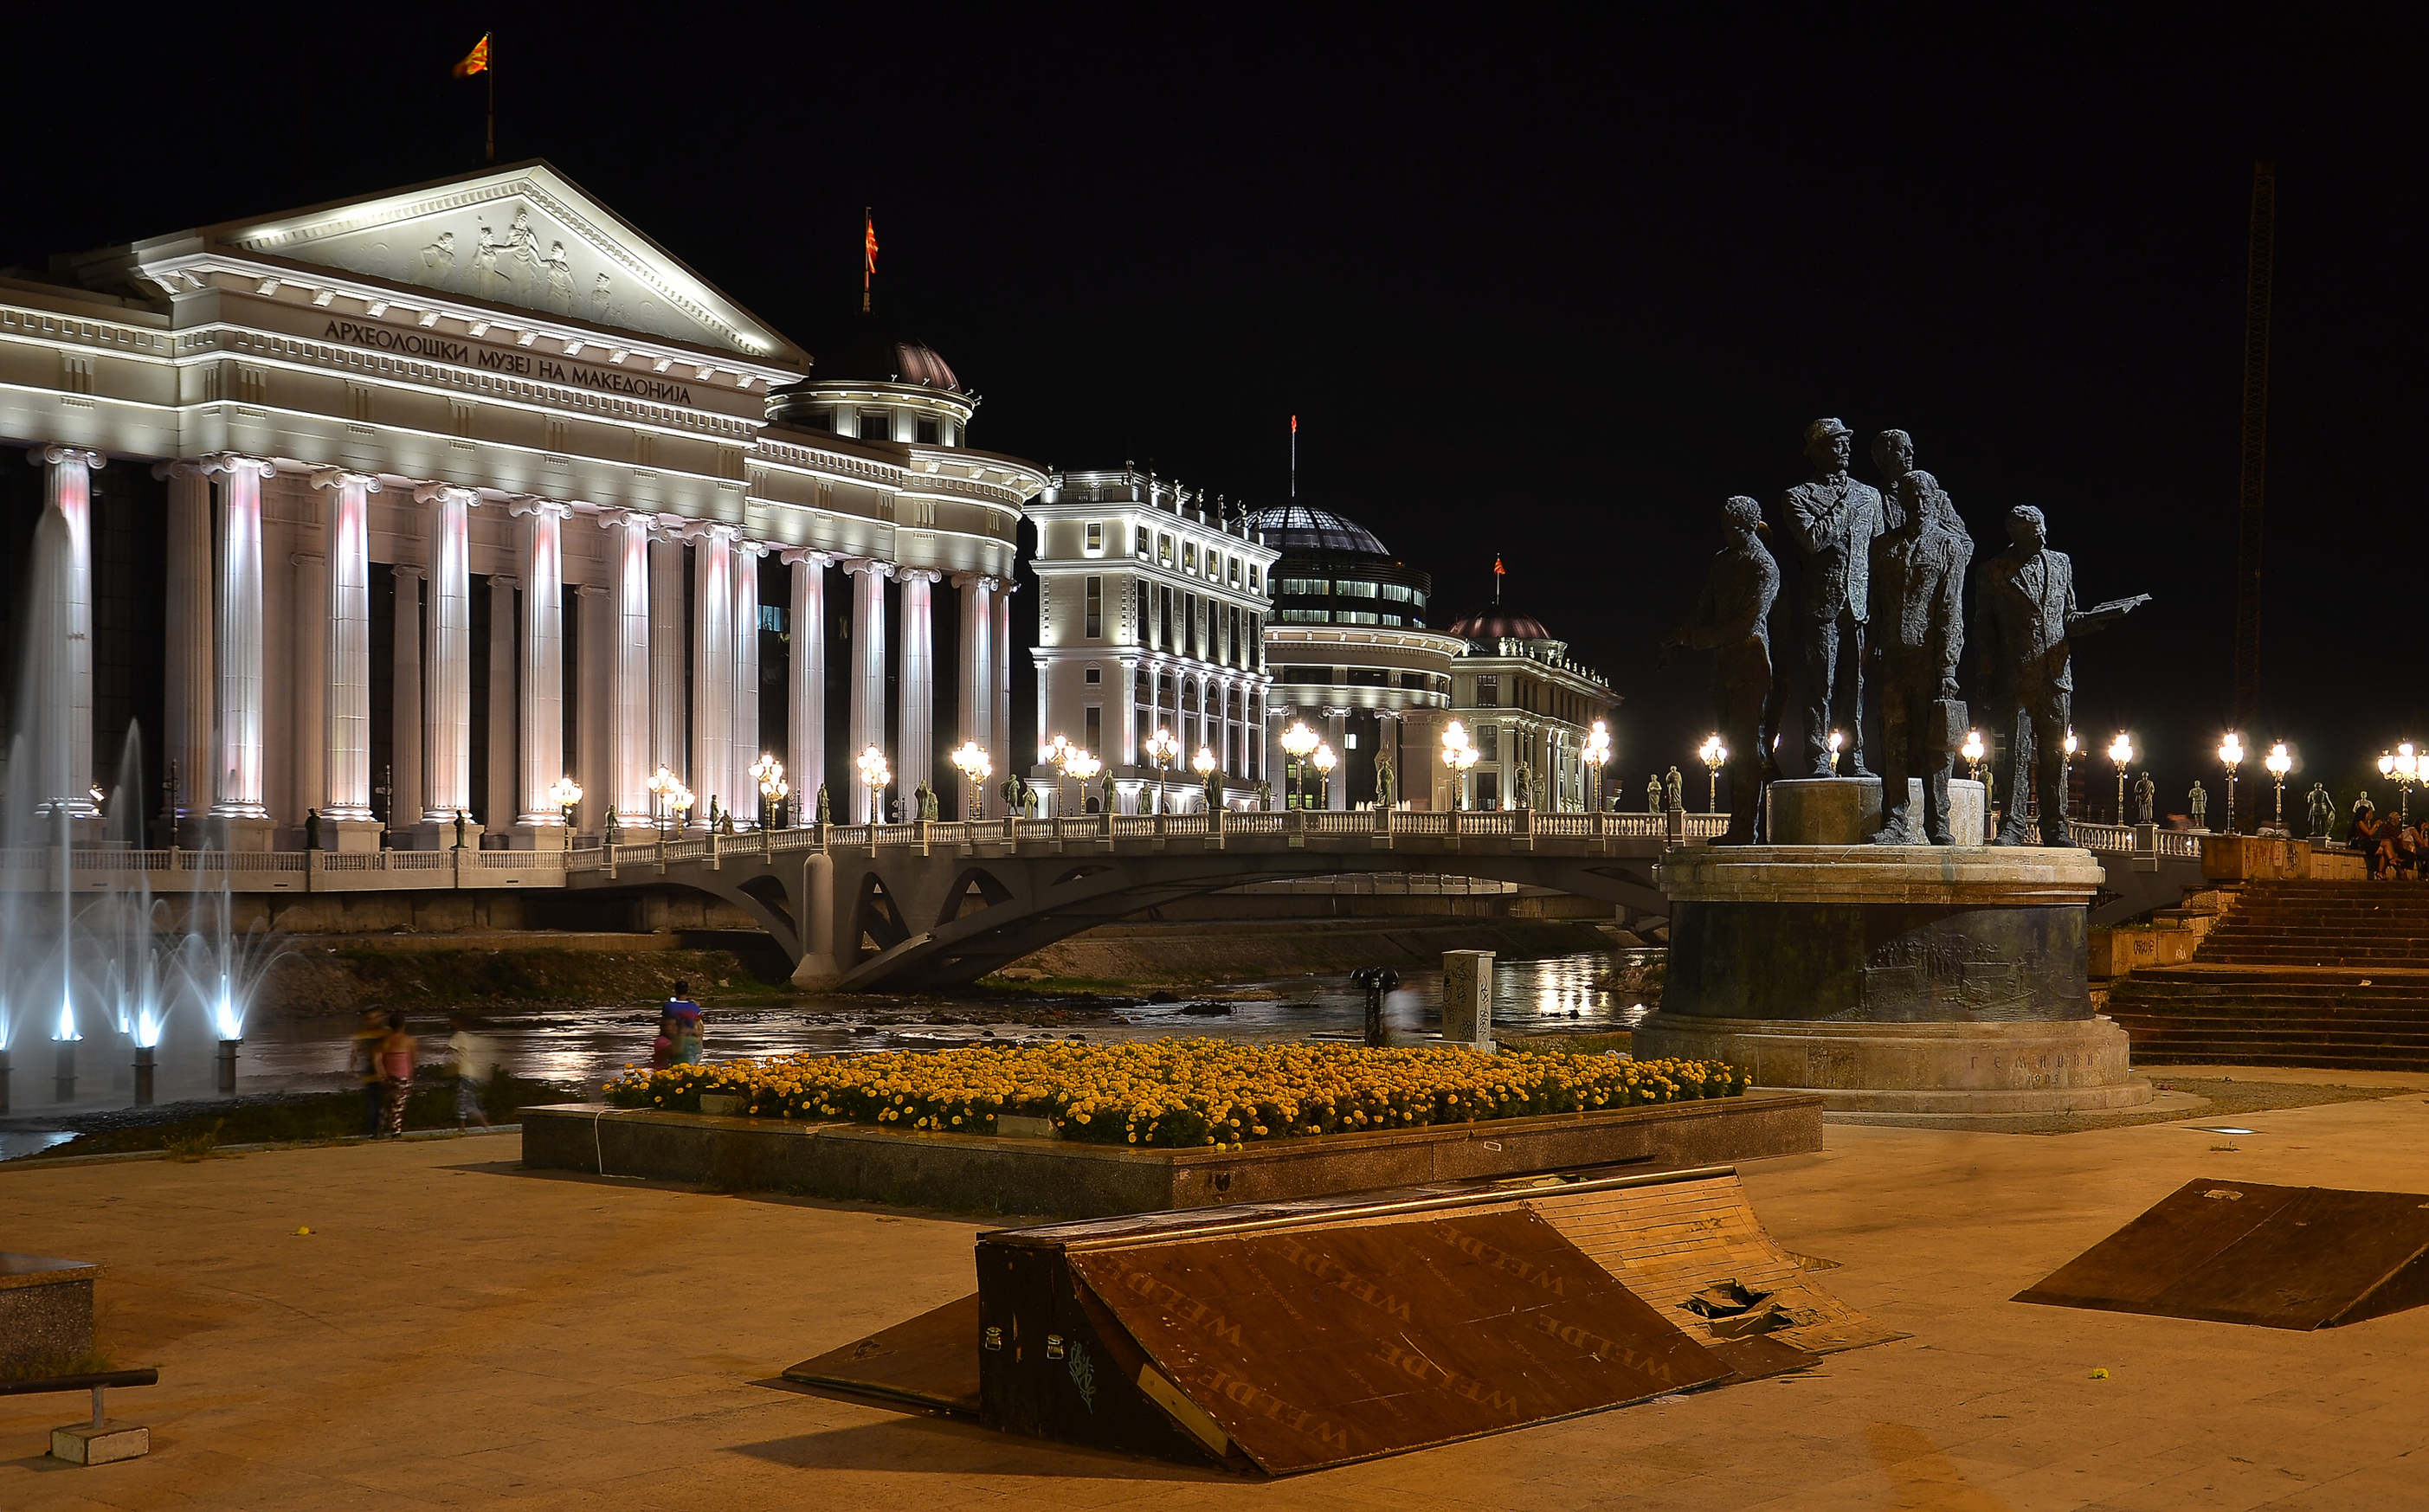 Skopje 2014 - Archeological Museum of Macedonia by night